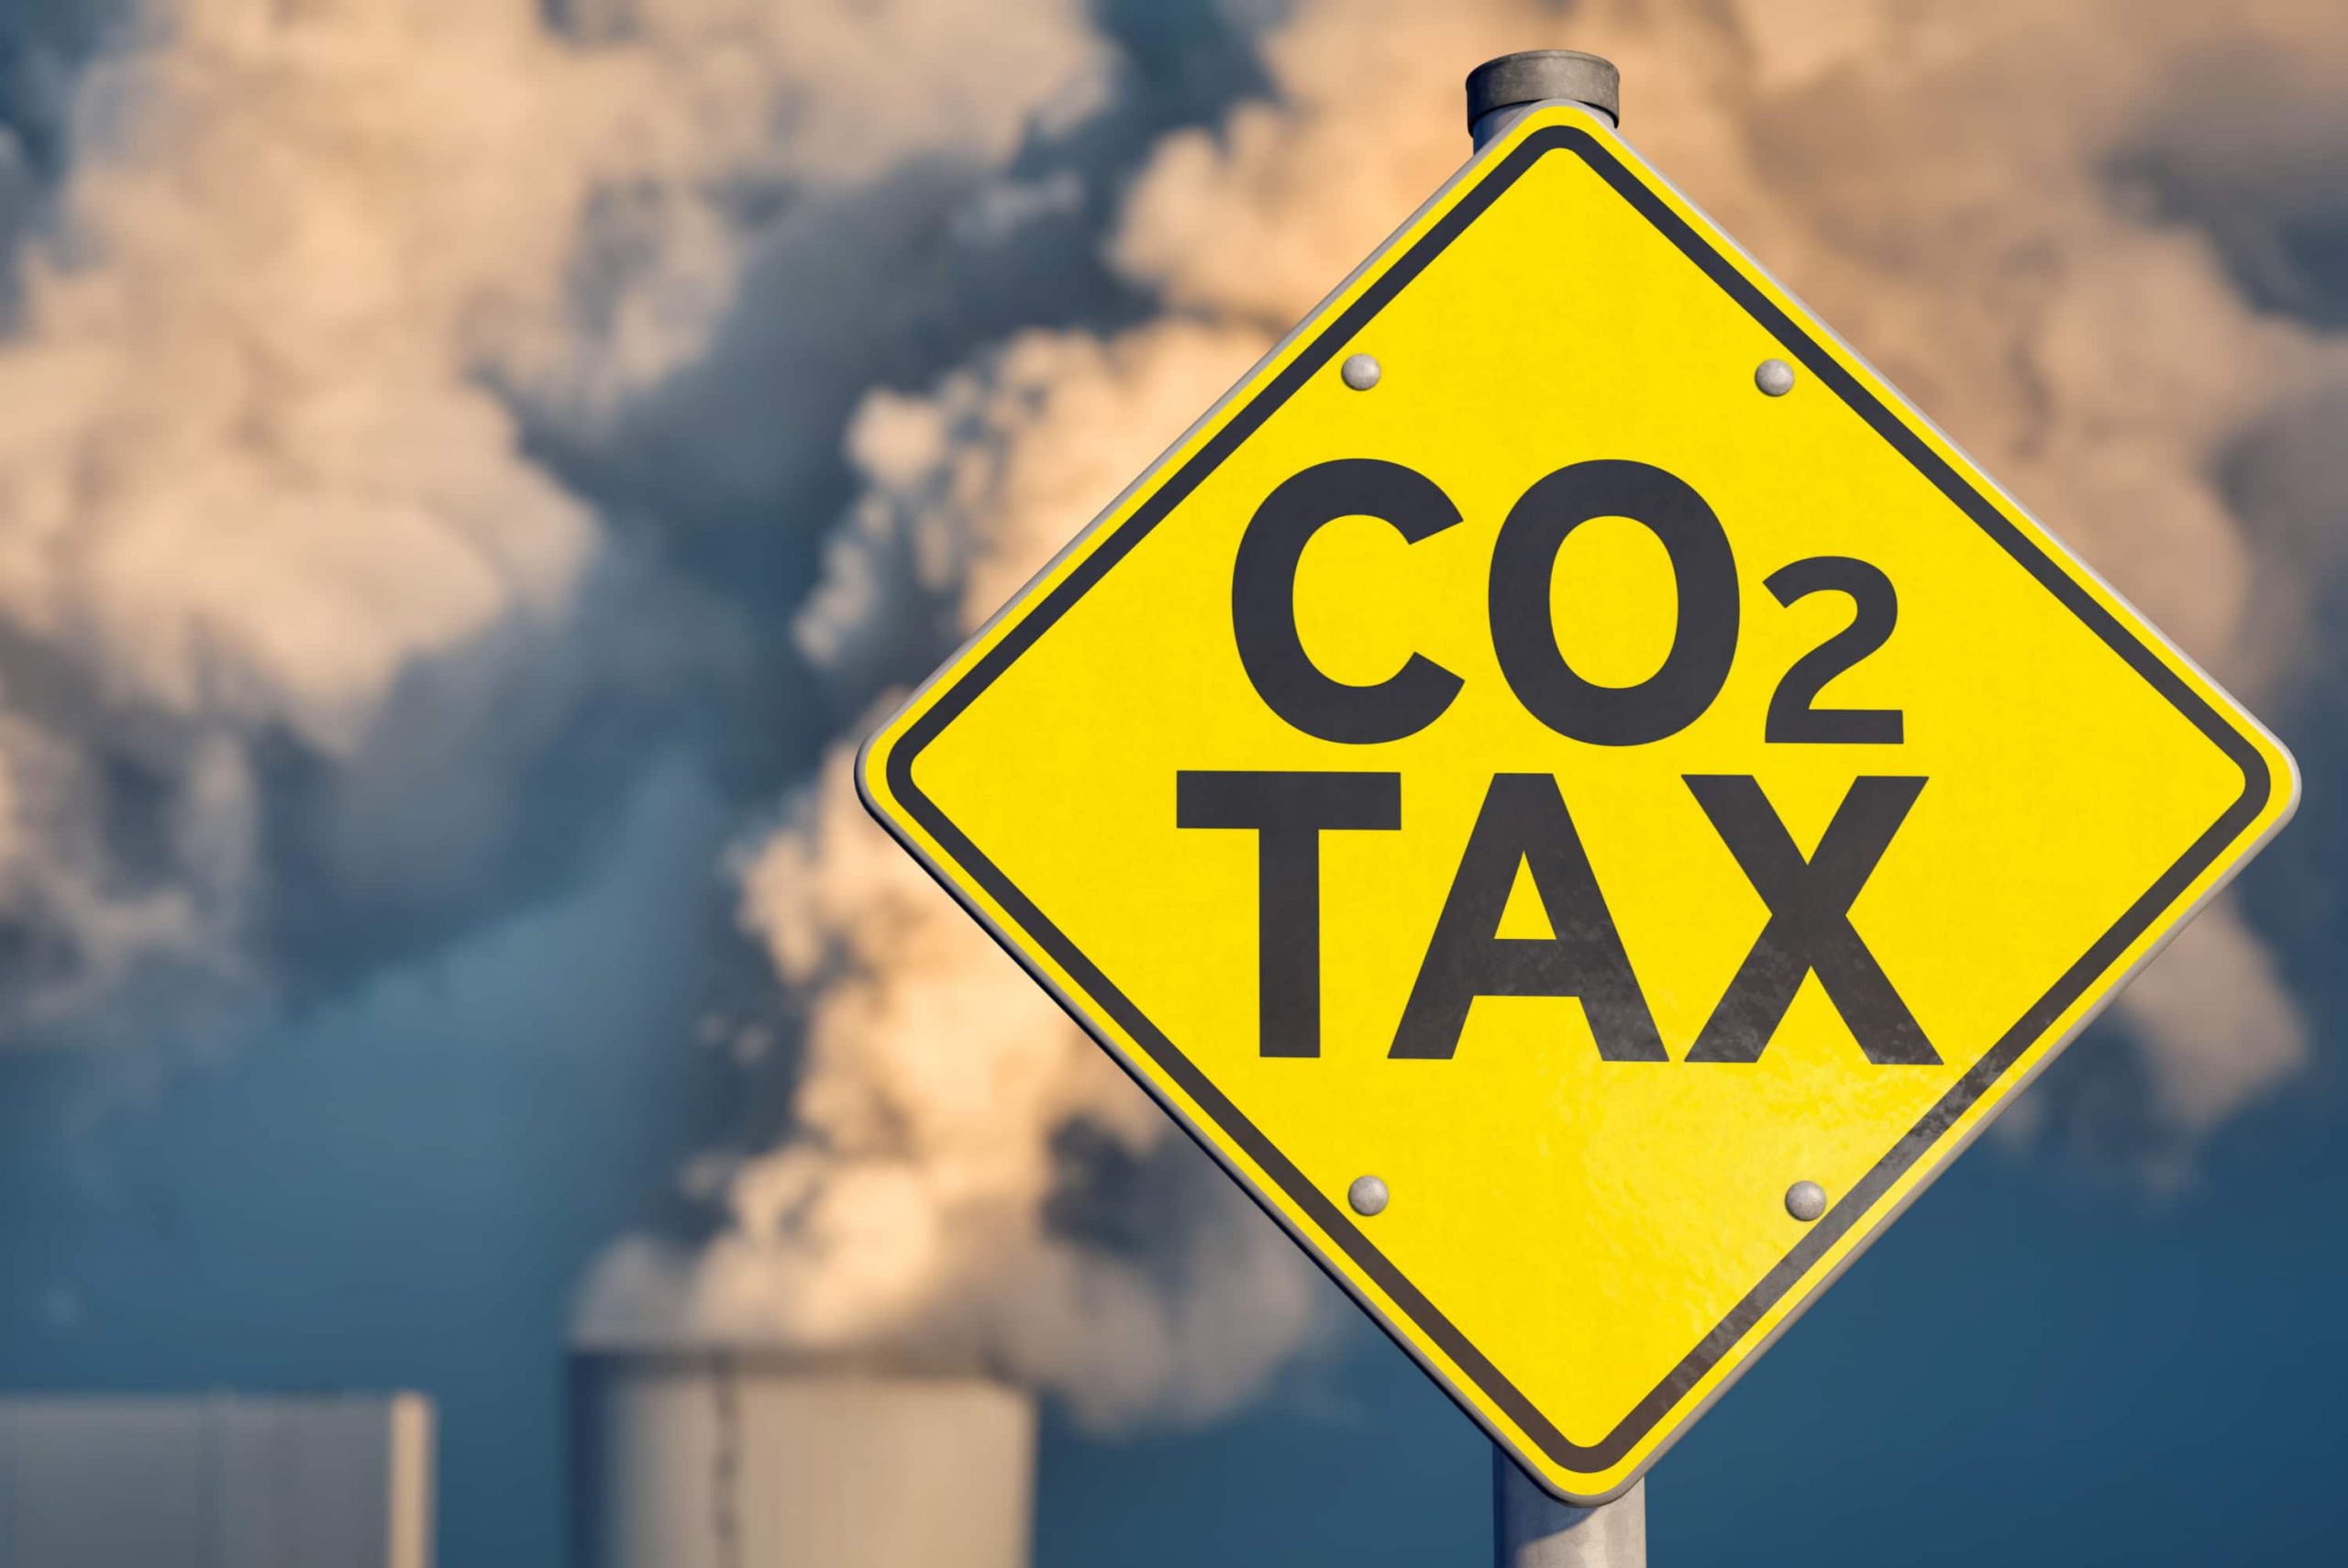 Cra Carbon Tax Rebate Tax Credit